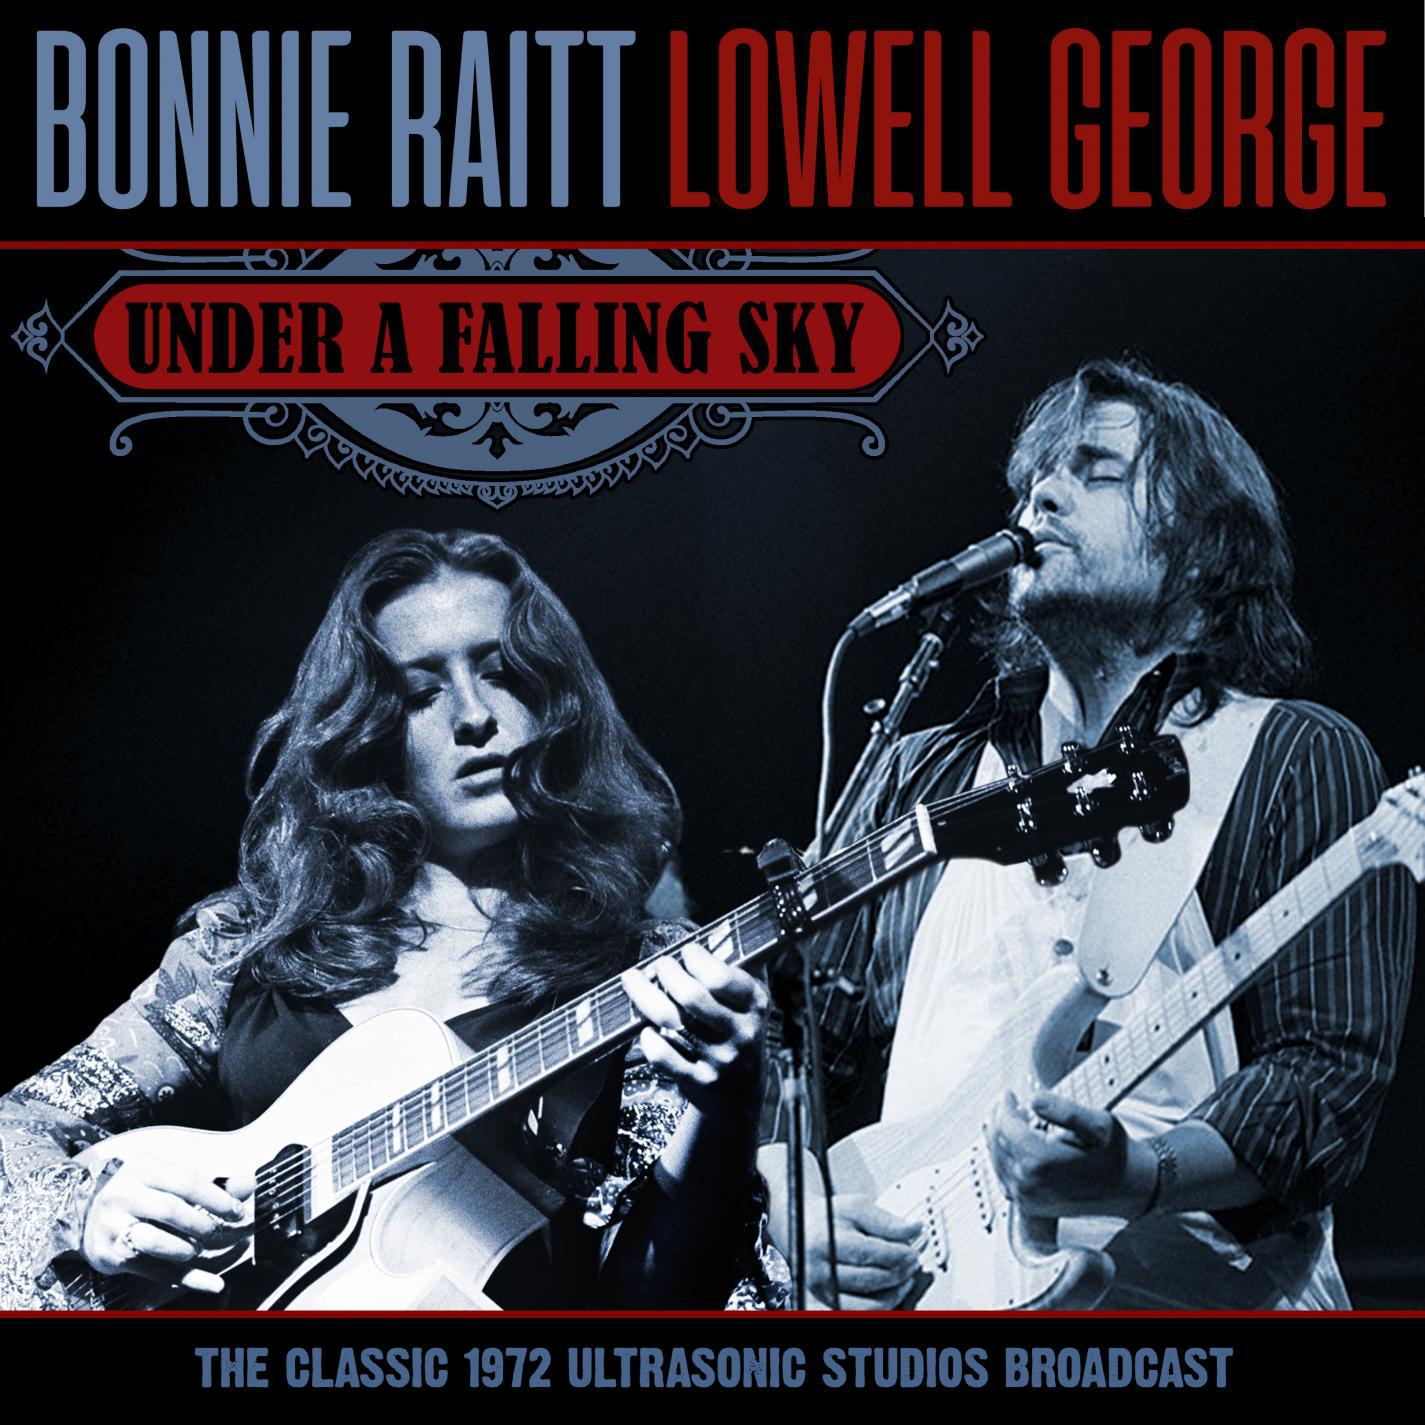 Bonnie Raitt - Can't Find My Way Home (Live 1972)